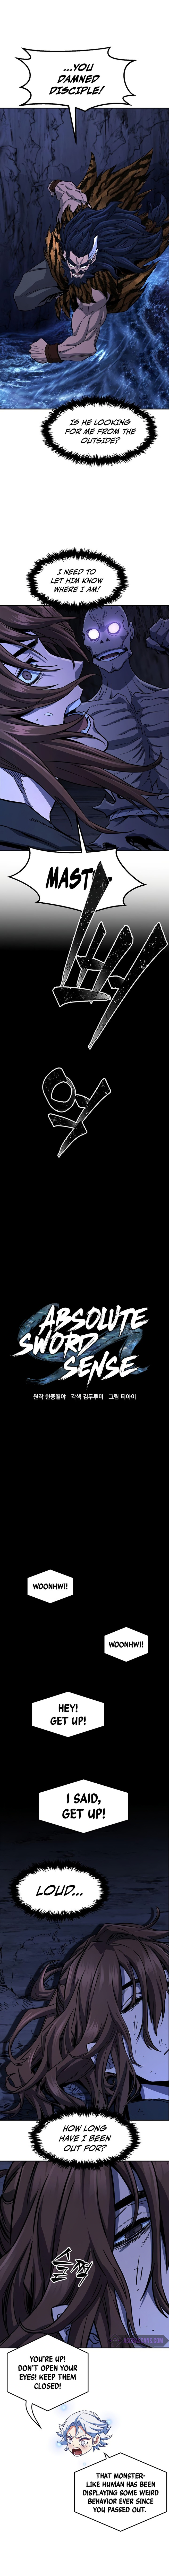 absolute_sword_sense_49_4